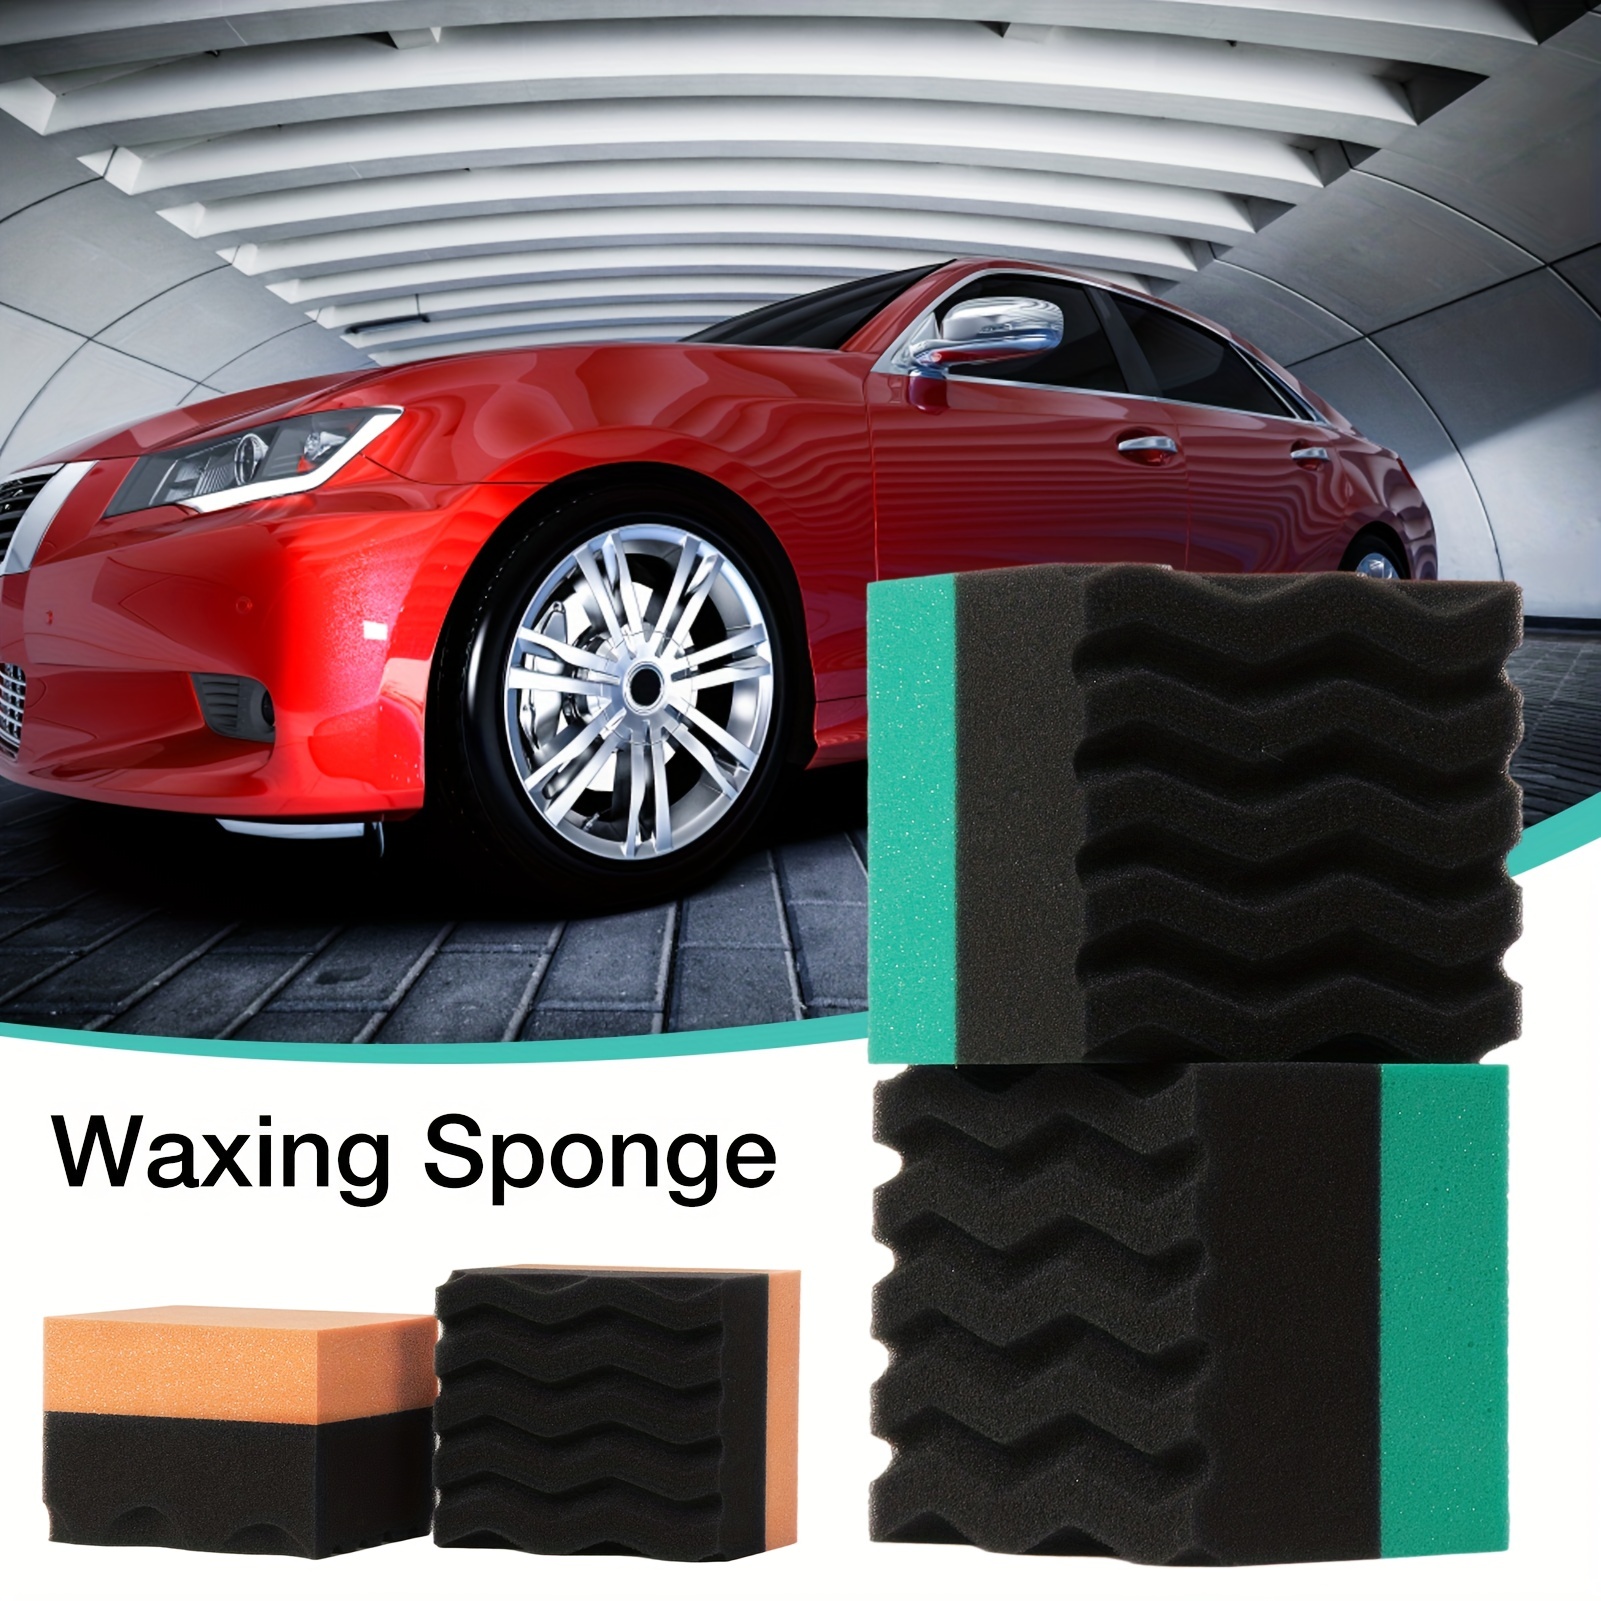 Tyre Dressing Applicator - OCD Detailing Online Store